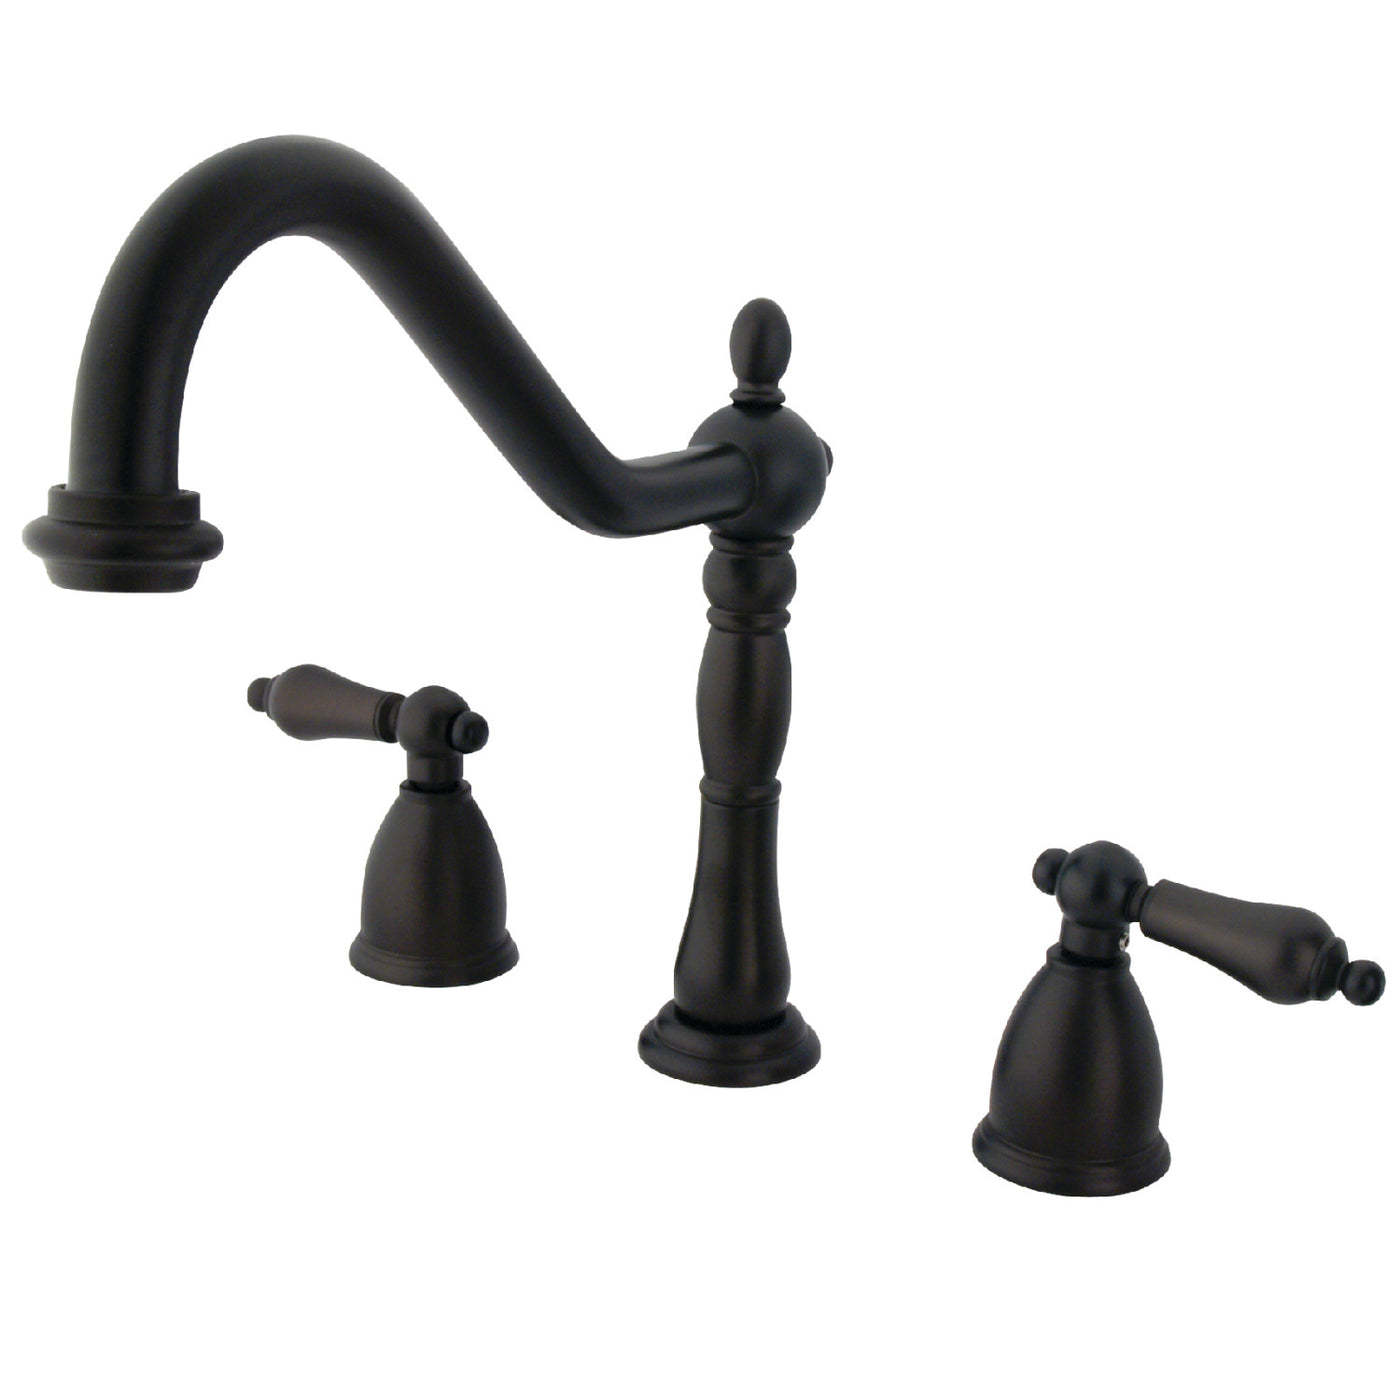 Elements of Design EB1795ALLS Widespread Kitchen Faucet, Oil Rubbed Bronze